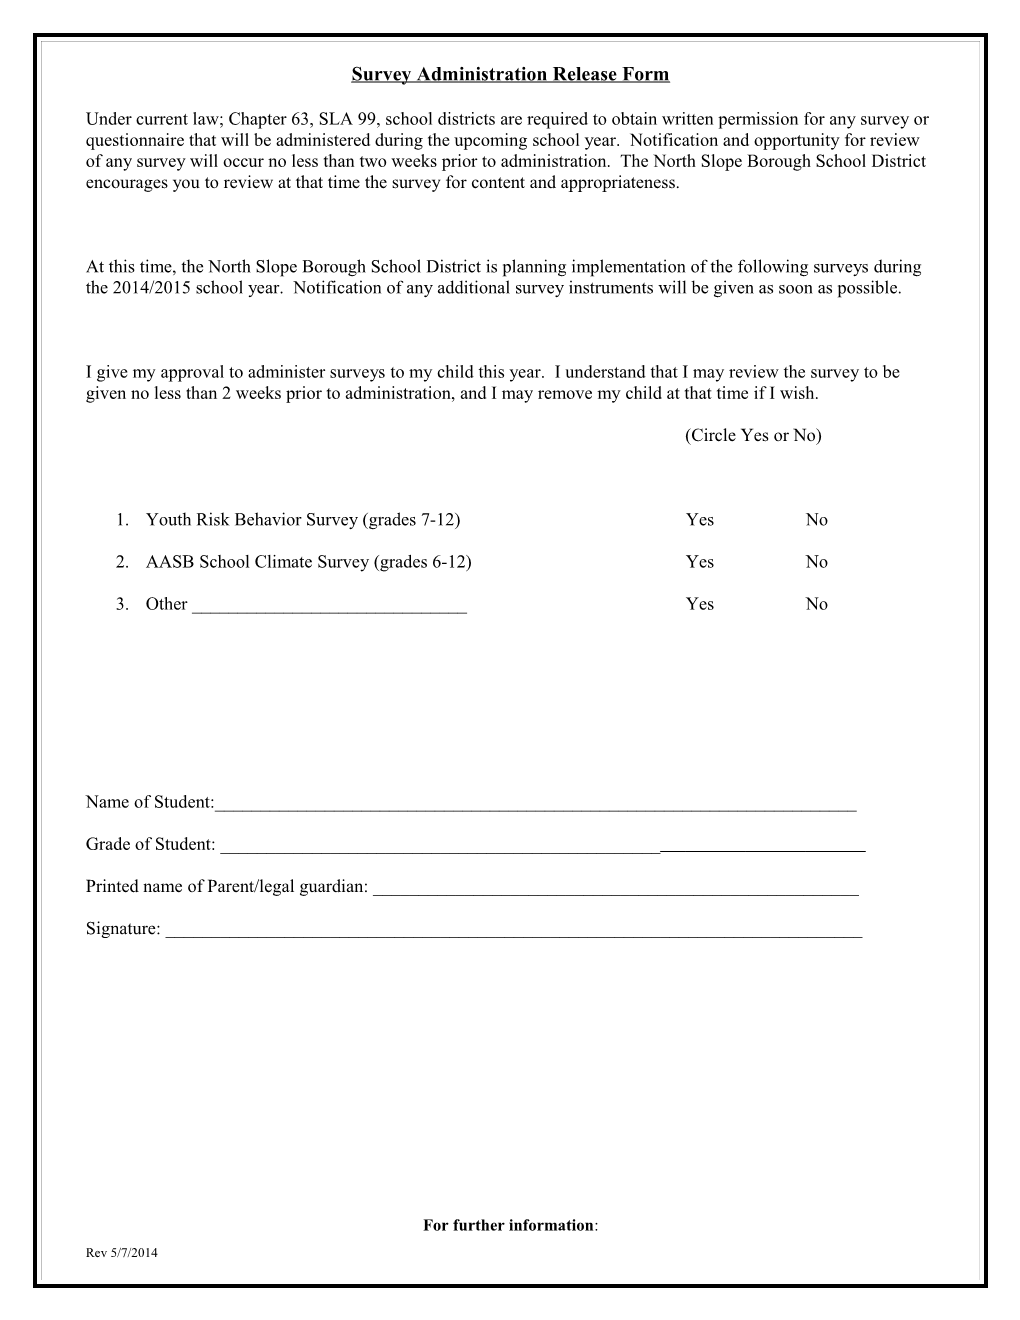 Survey Administration Release Form